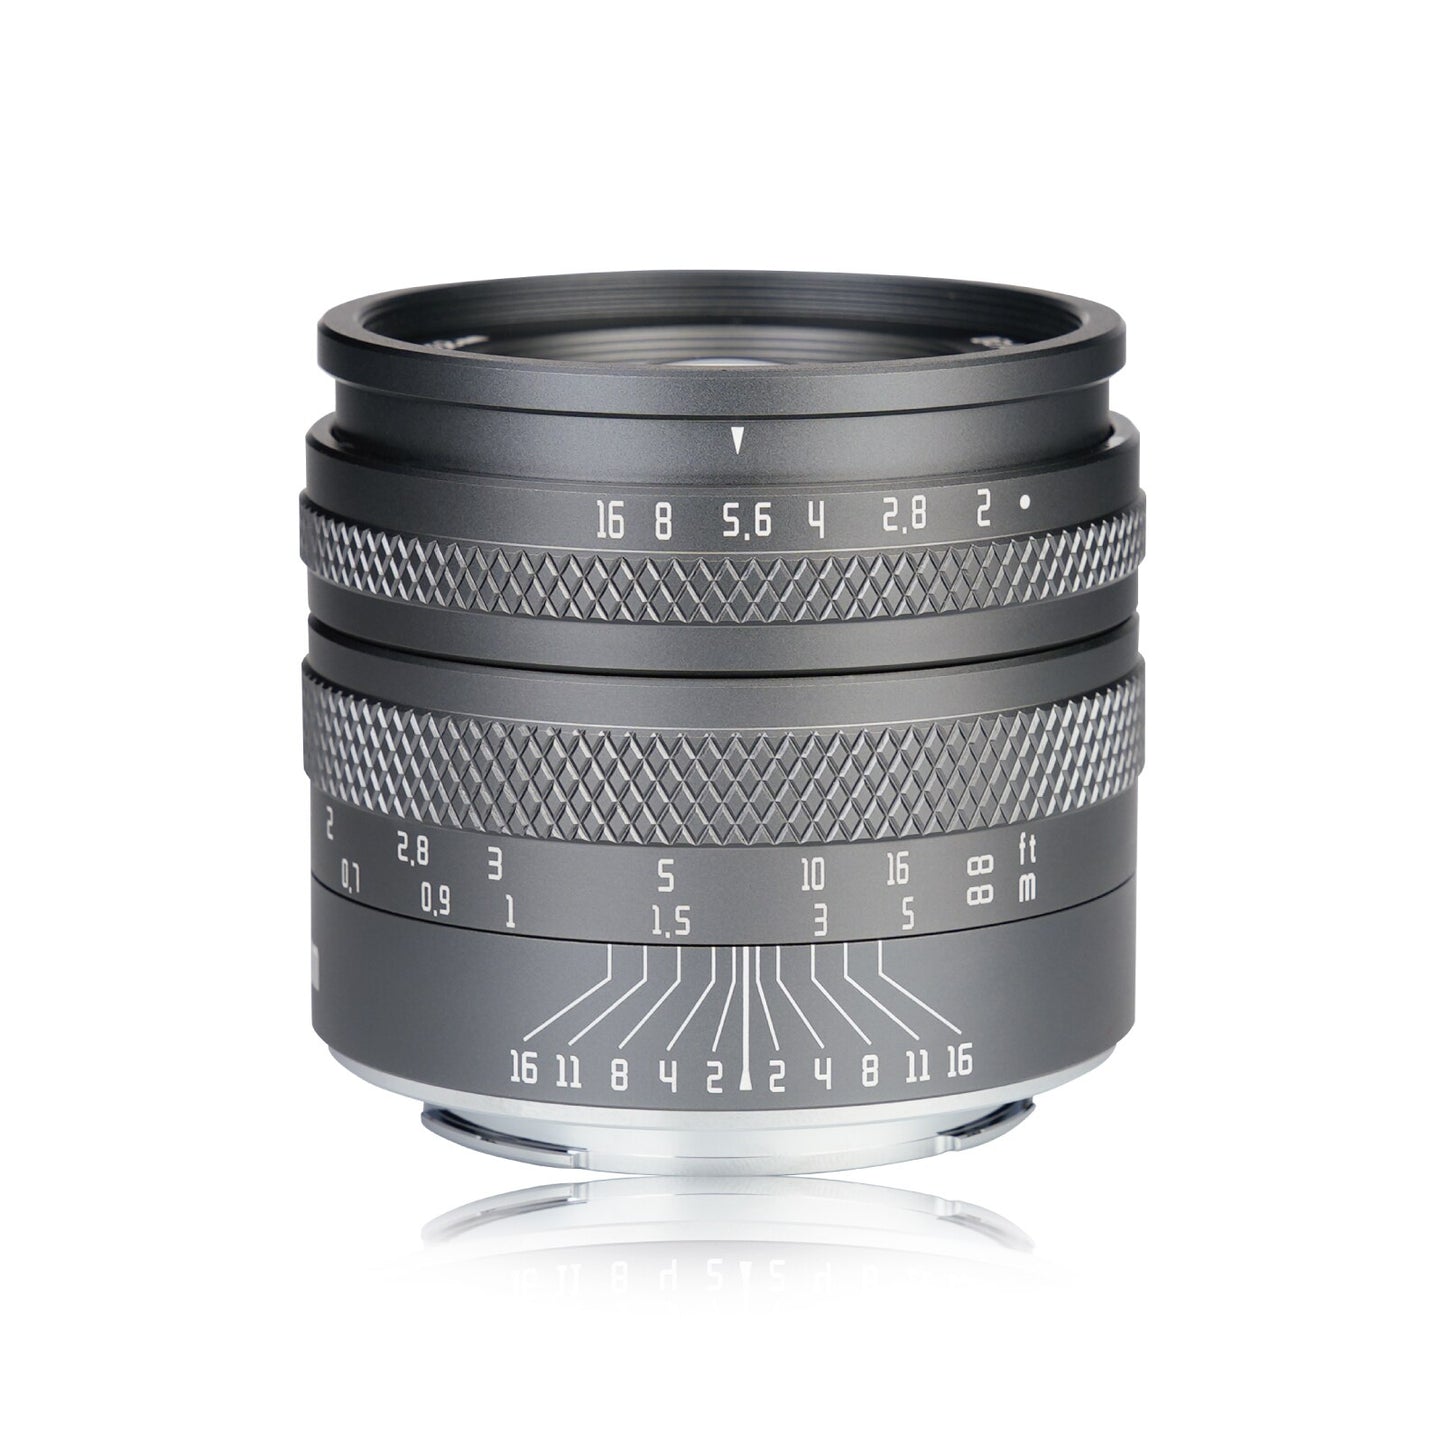 AstrHori 50mm F2.0 Large Aperture Full Frame Manual Lens